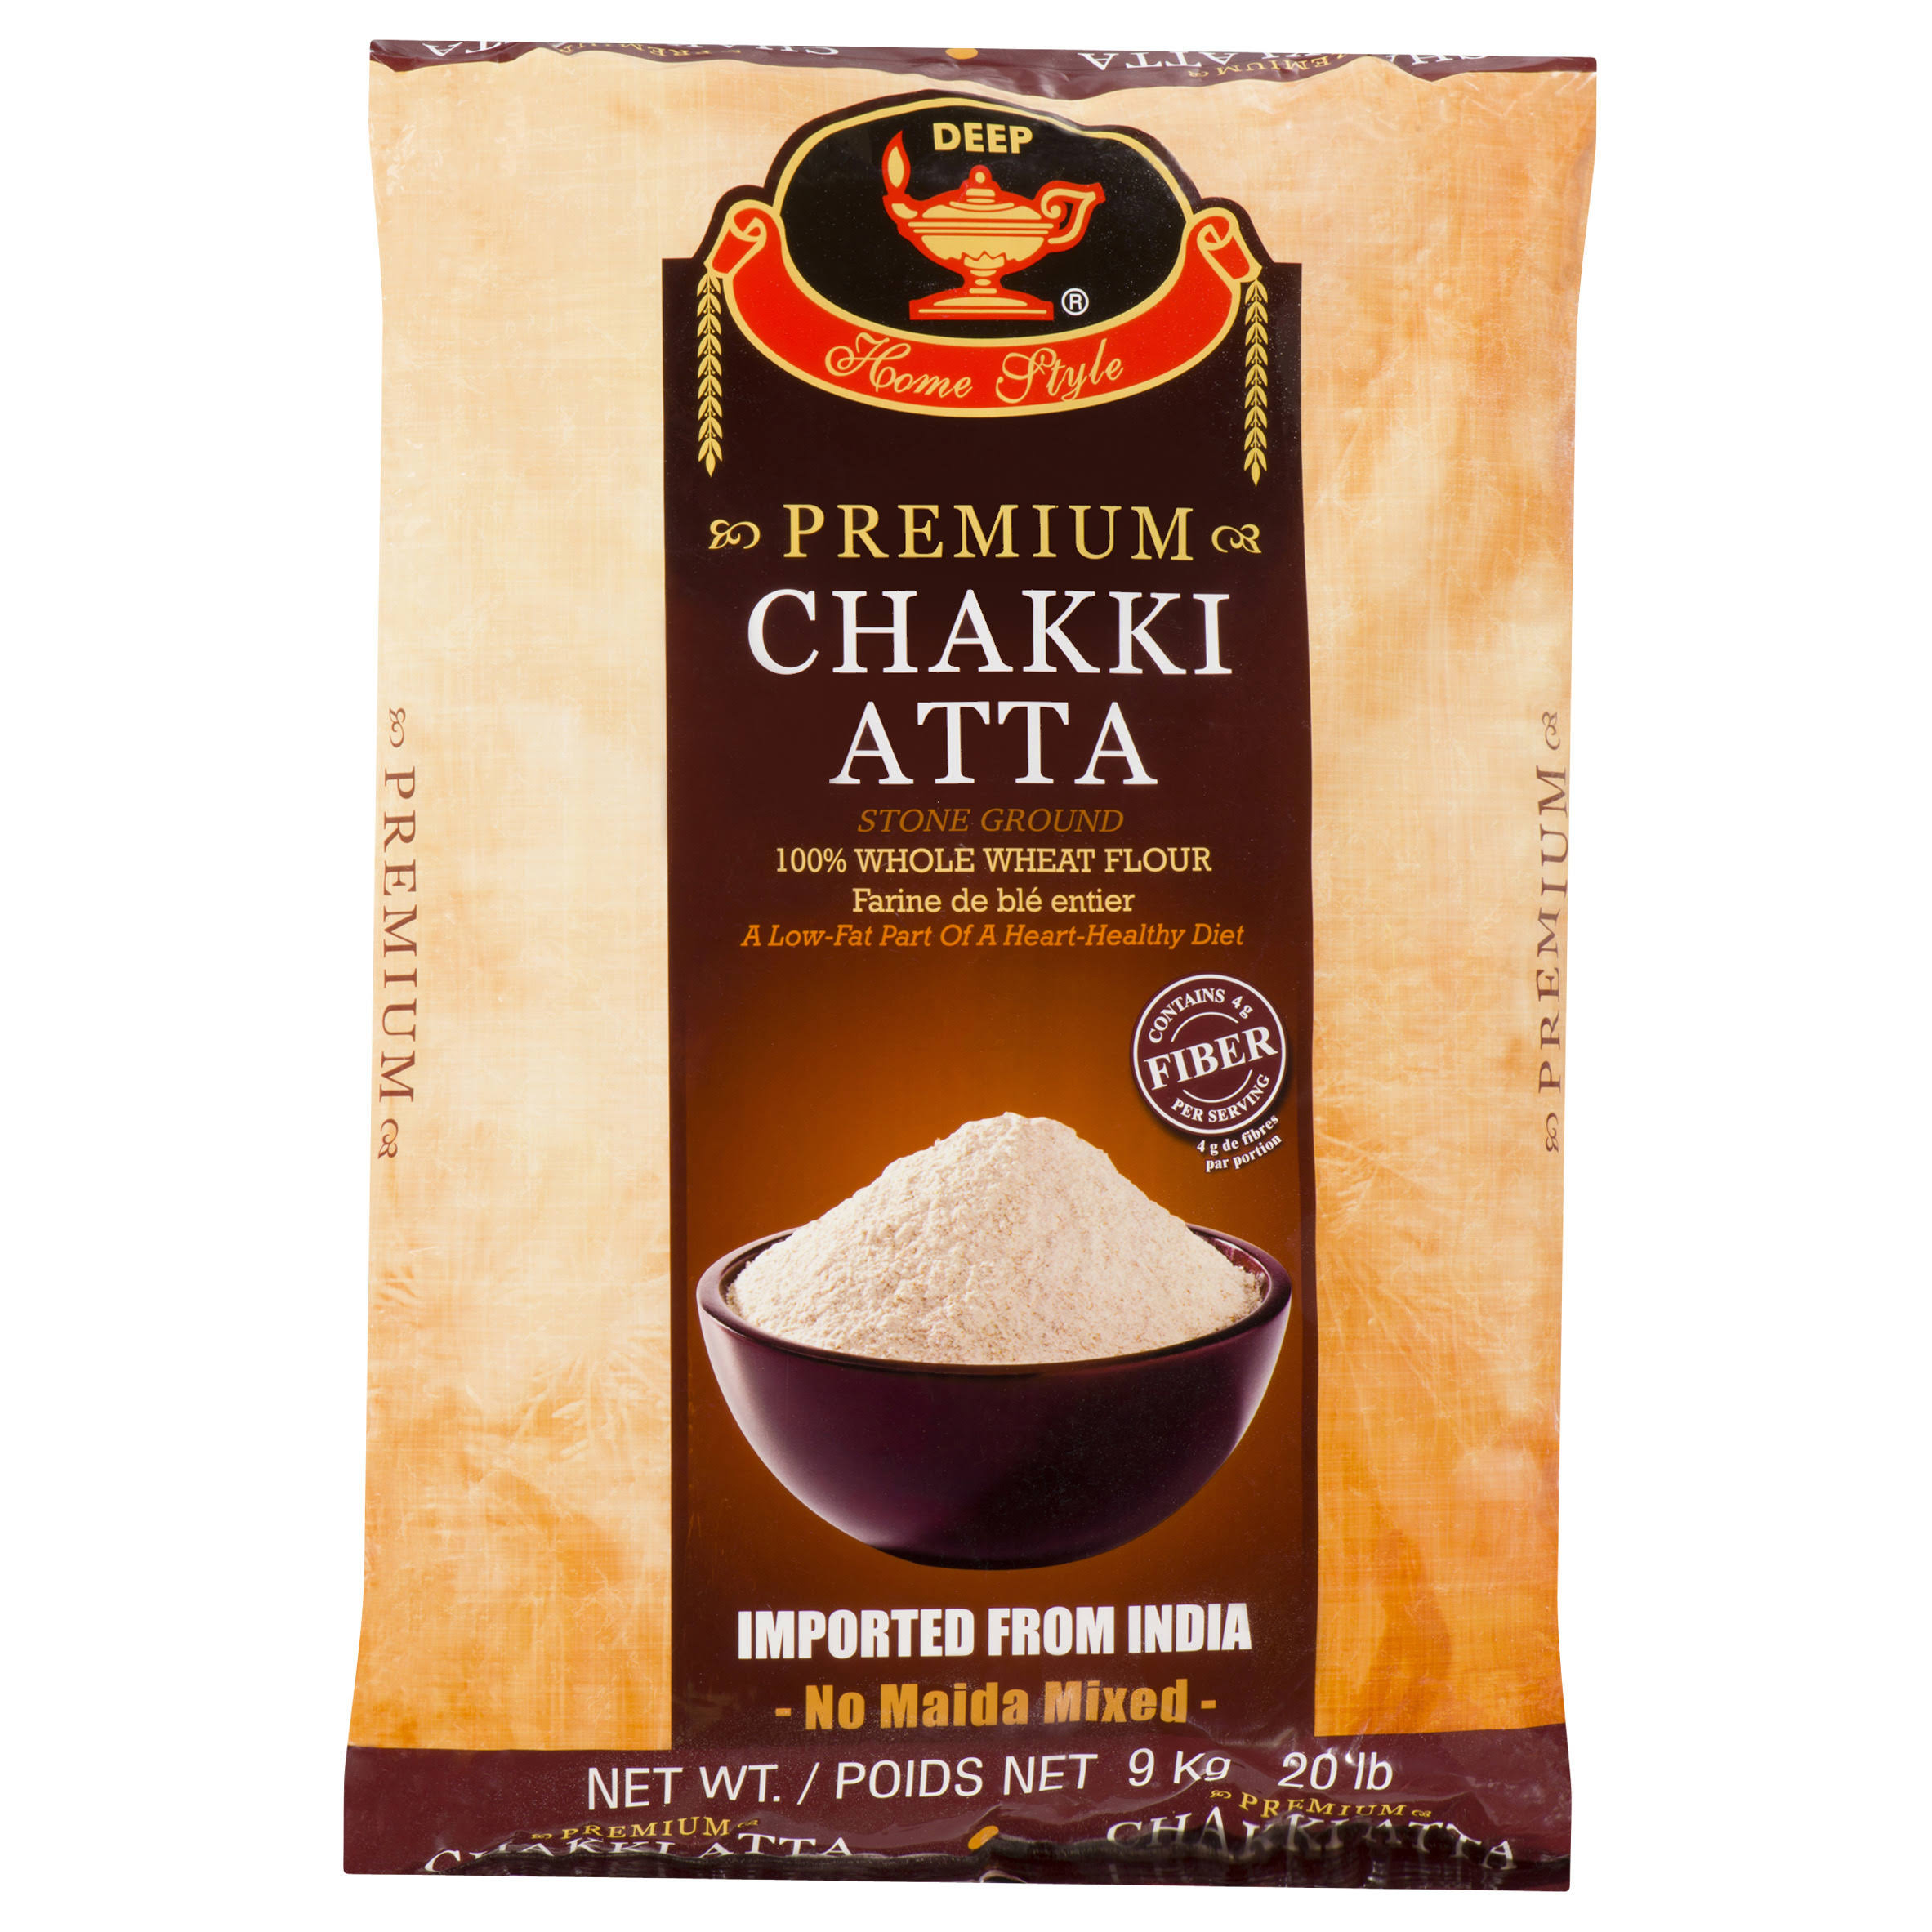 Deep Indian Chapati Flour Chakki Atta - 20 lb